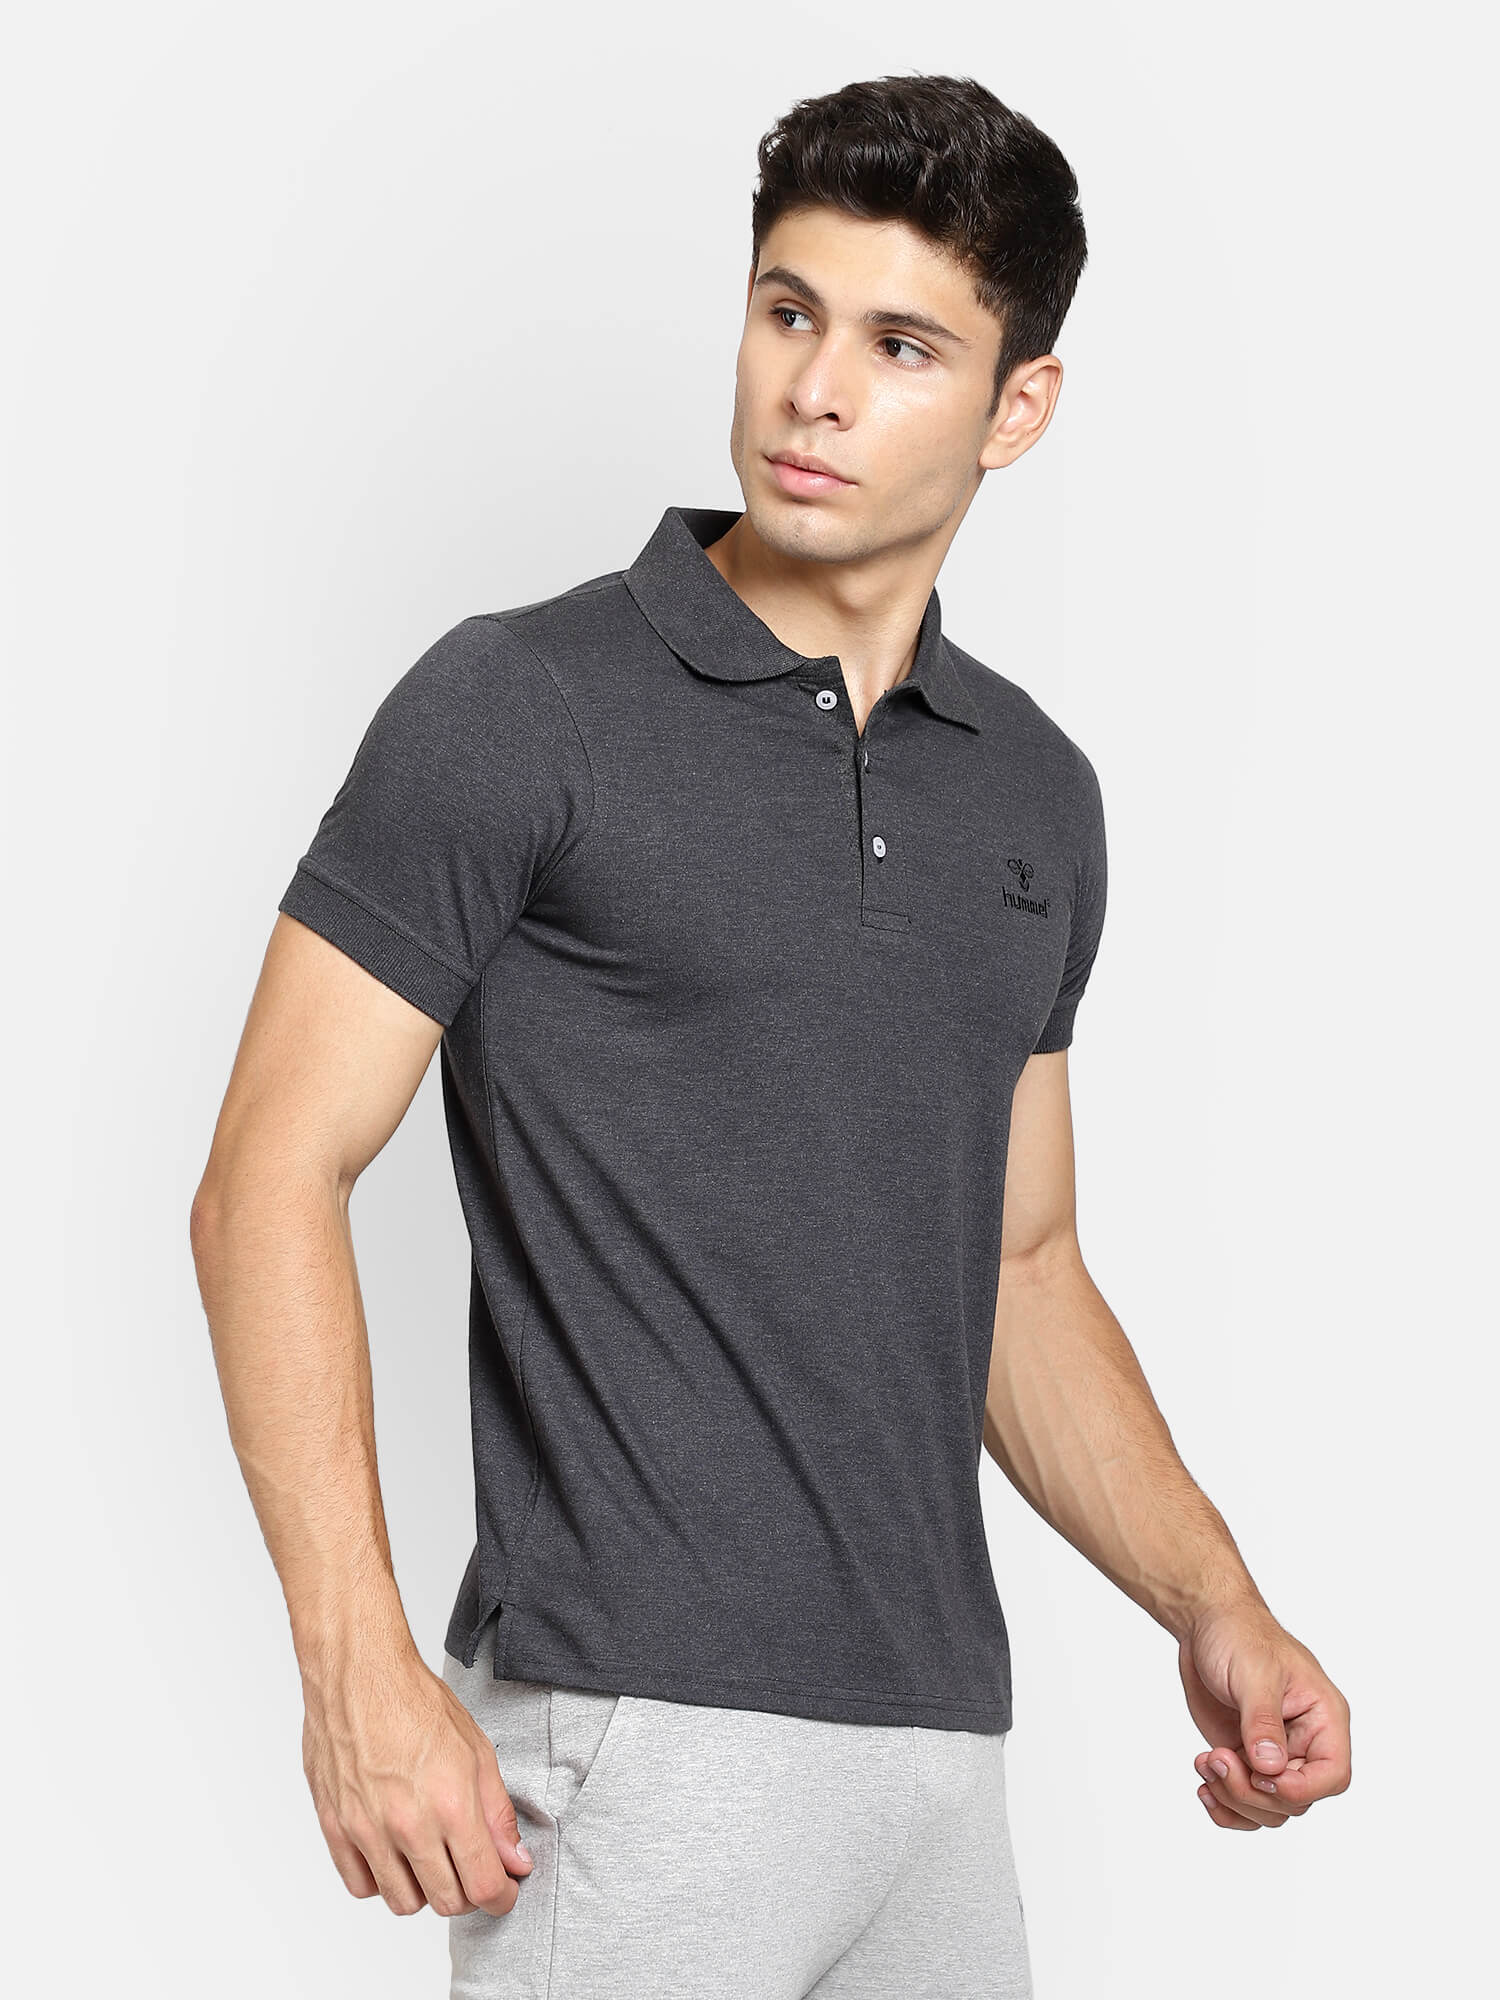 Ascon Polo Black T-Shirts for Men